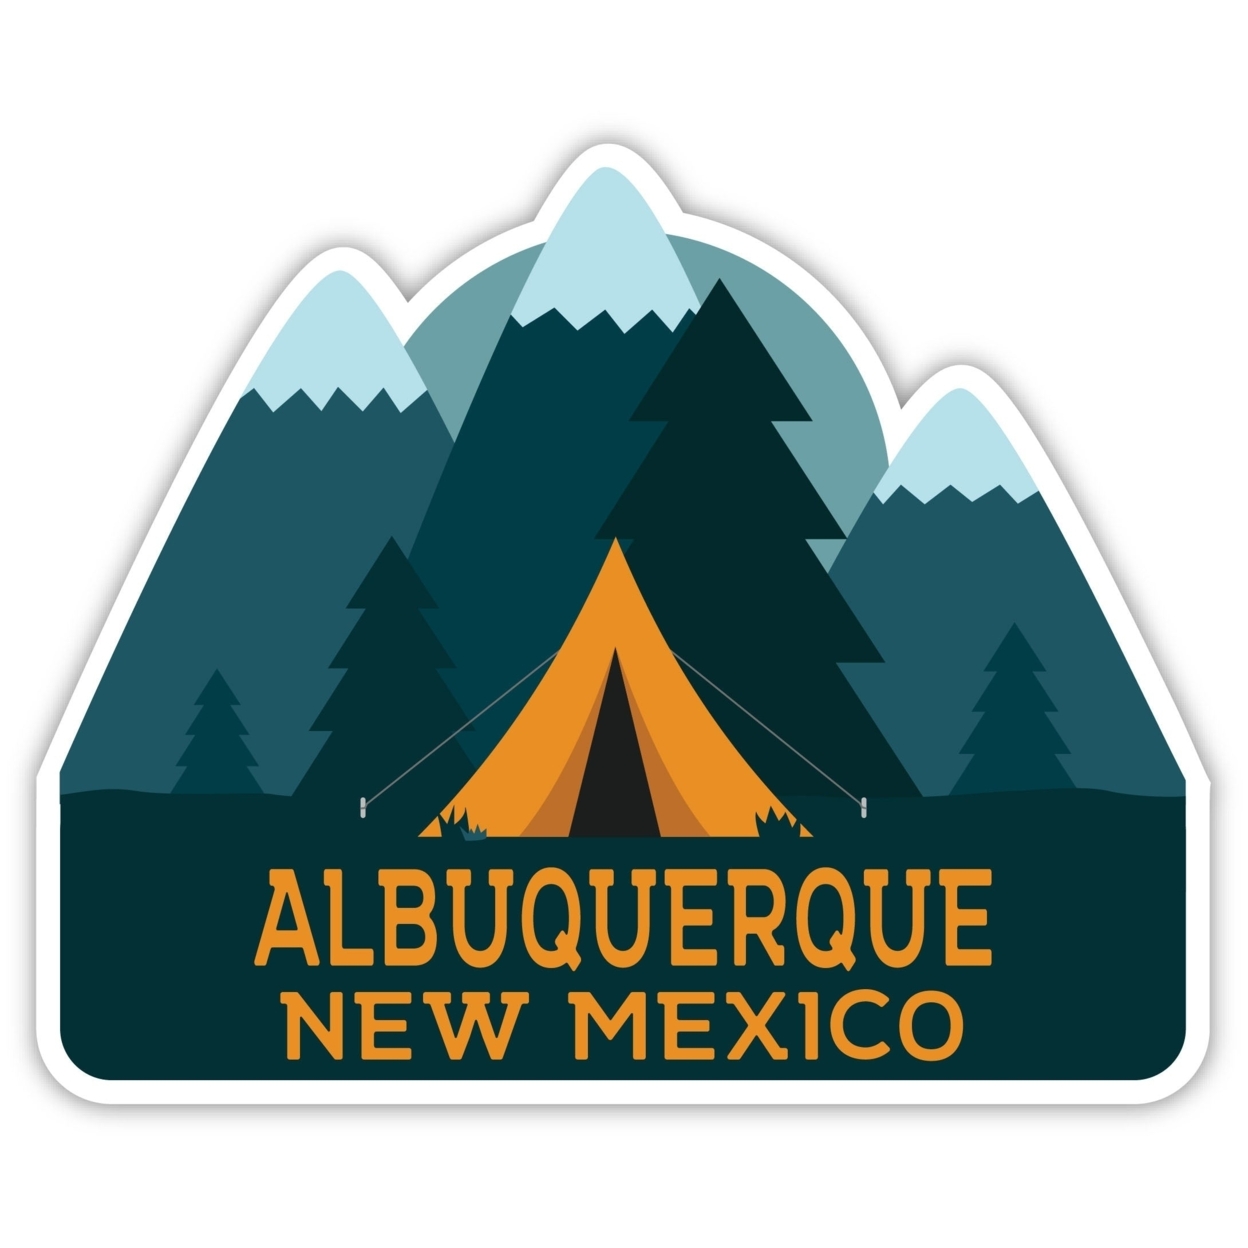 Albuquerque New Mexico Souvenir Decorative Stickers (Choose Theme And Size) - 4-Pack, 6-Inch, Tent